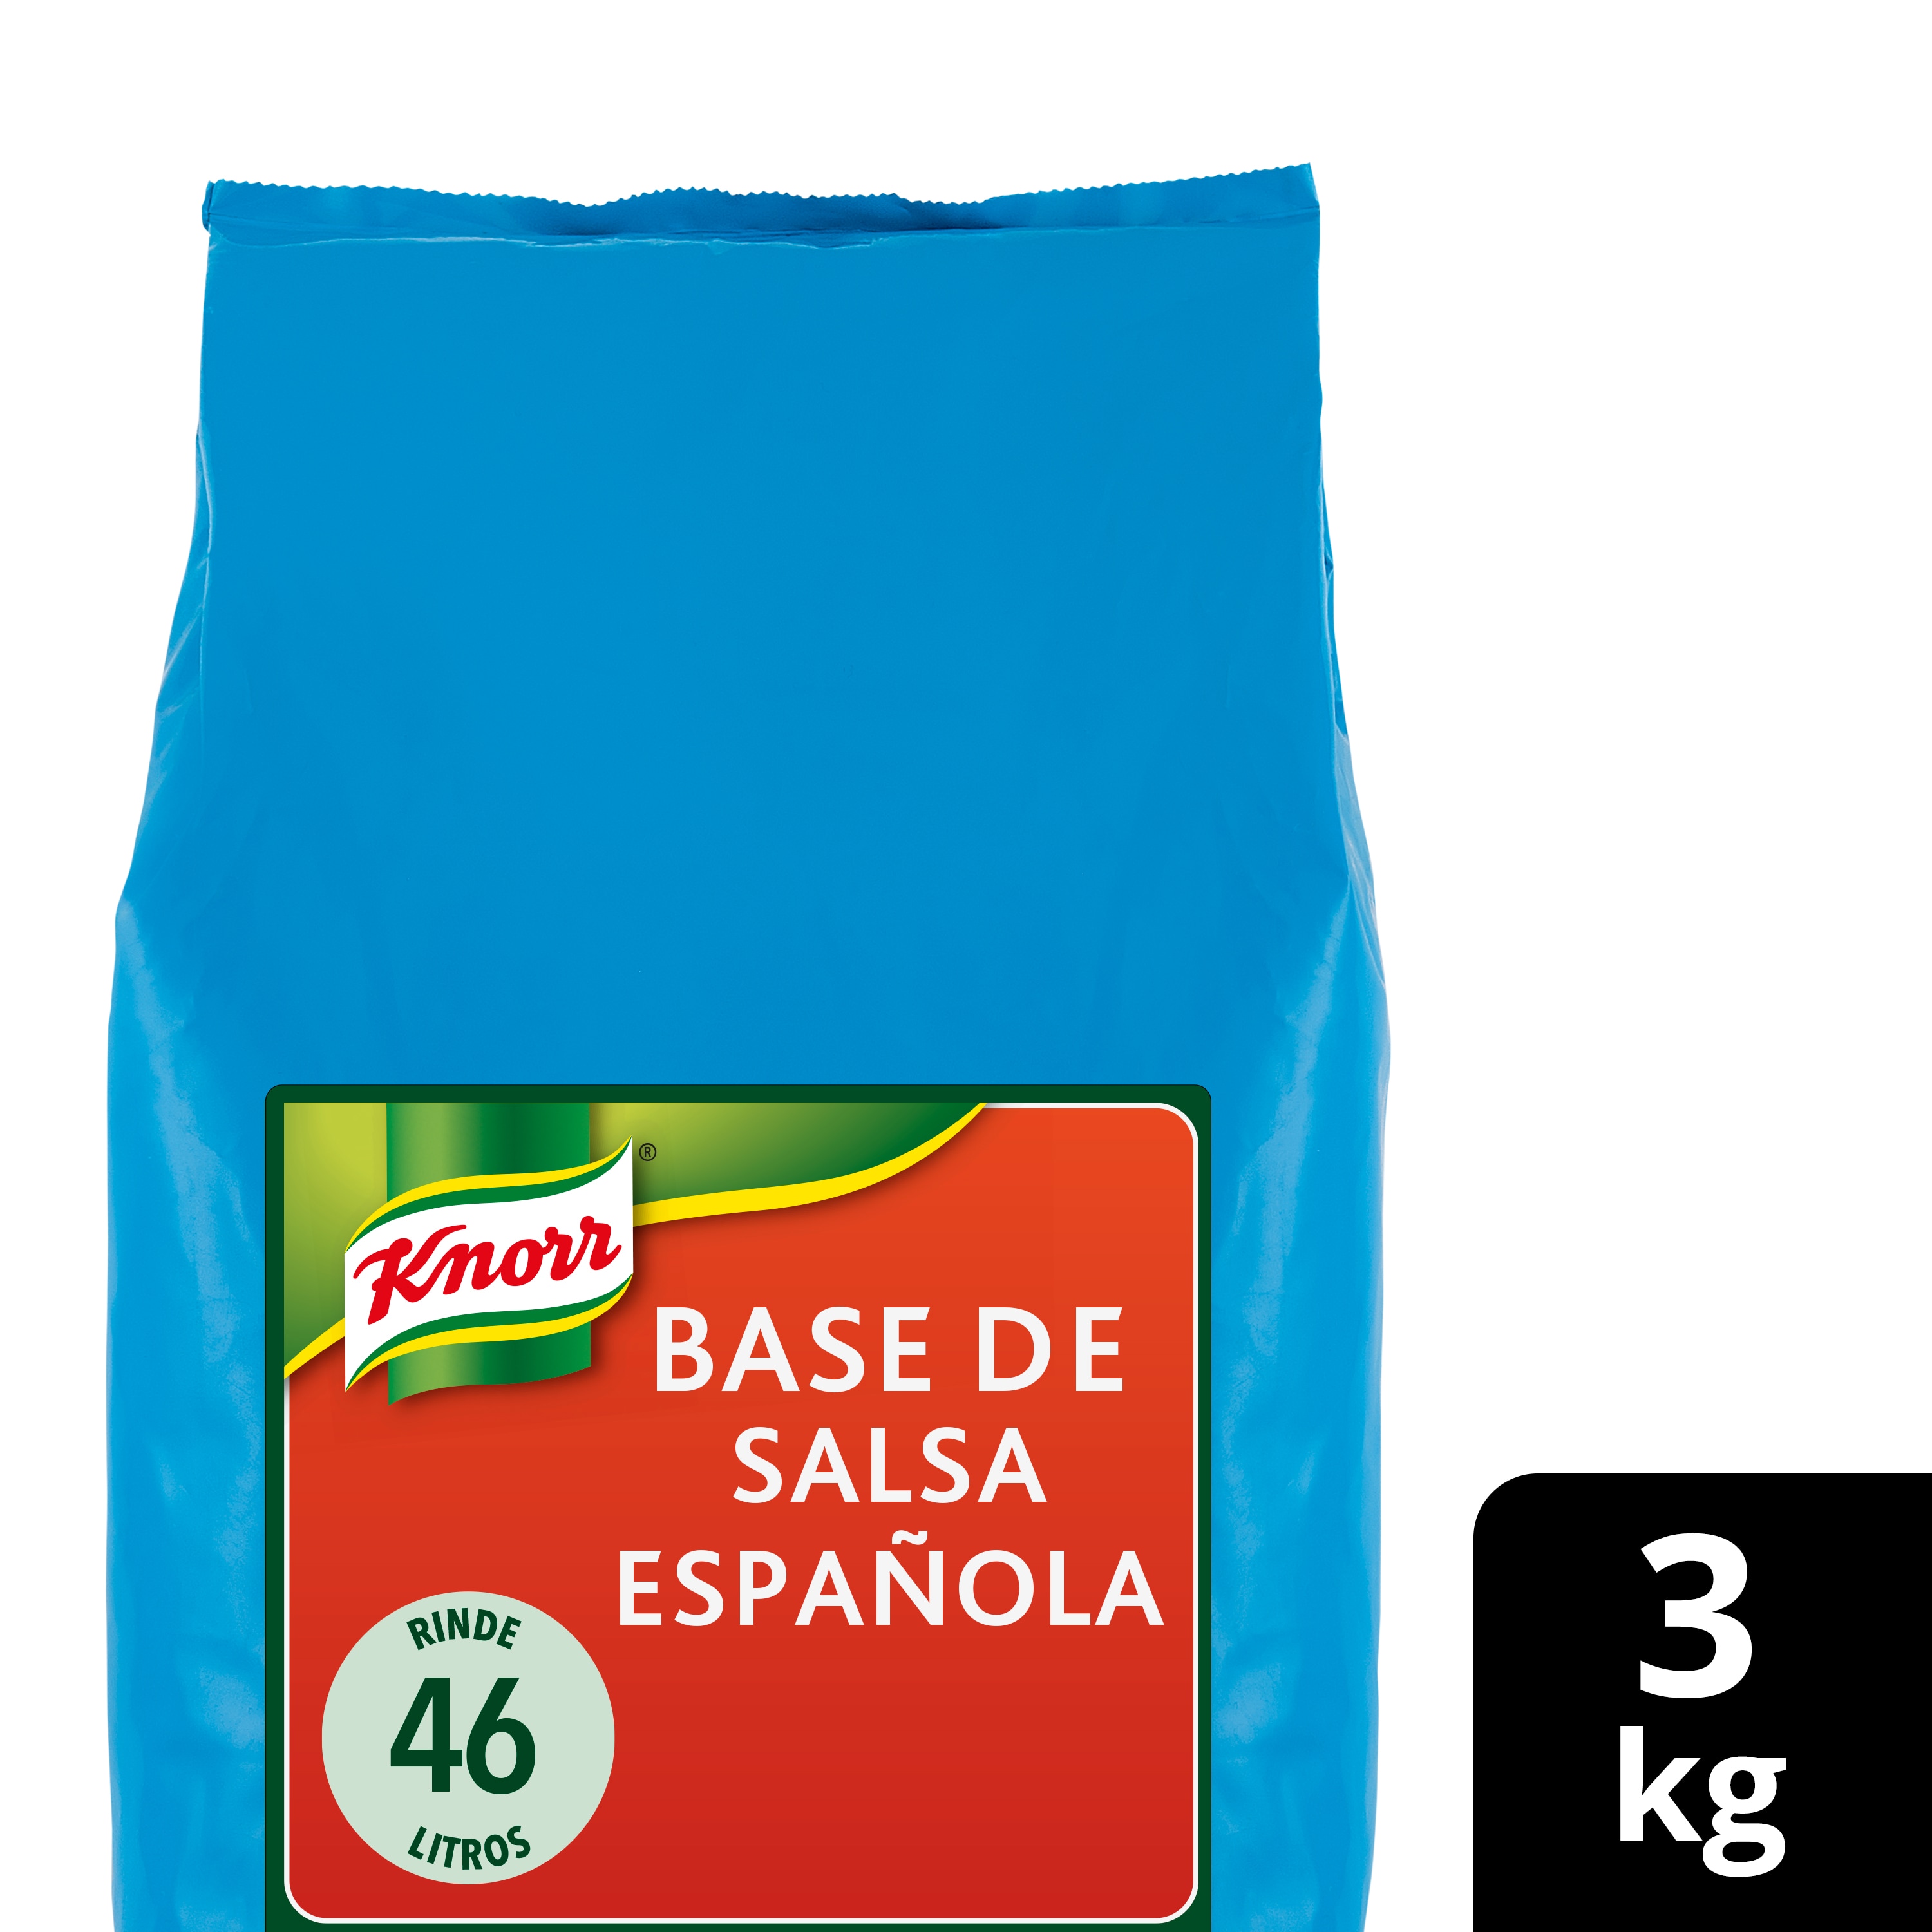 Knorr Salsa Base Española en frío deshidratada SinGluten 3Kg - 